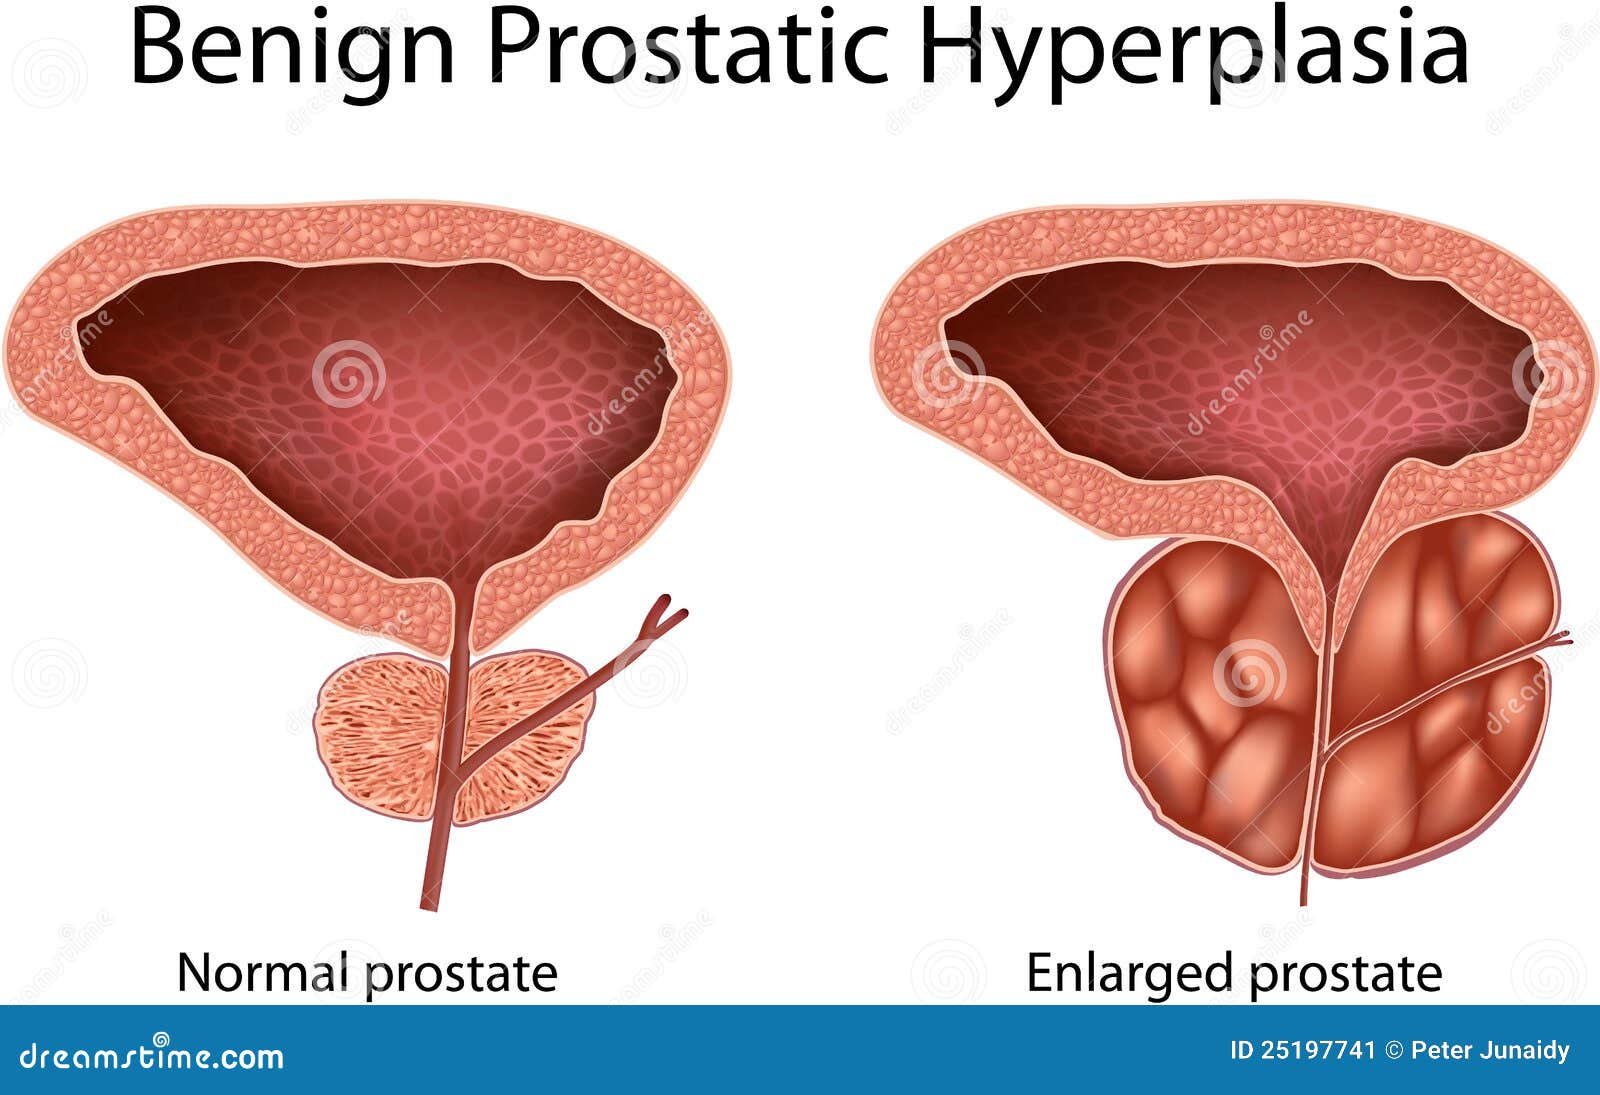 hipertrofie benigna de prostata)